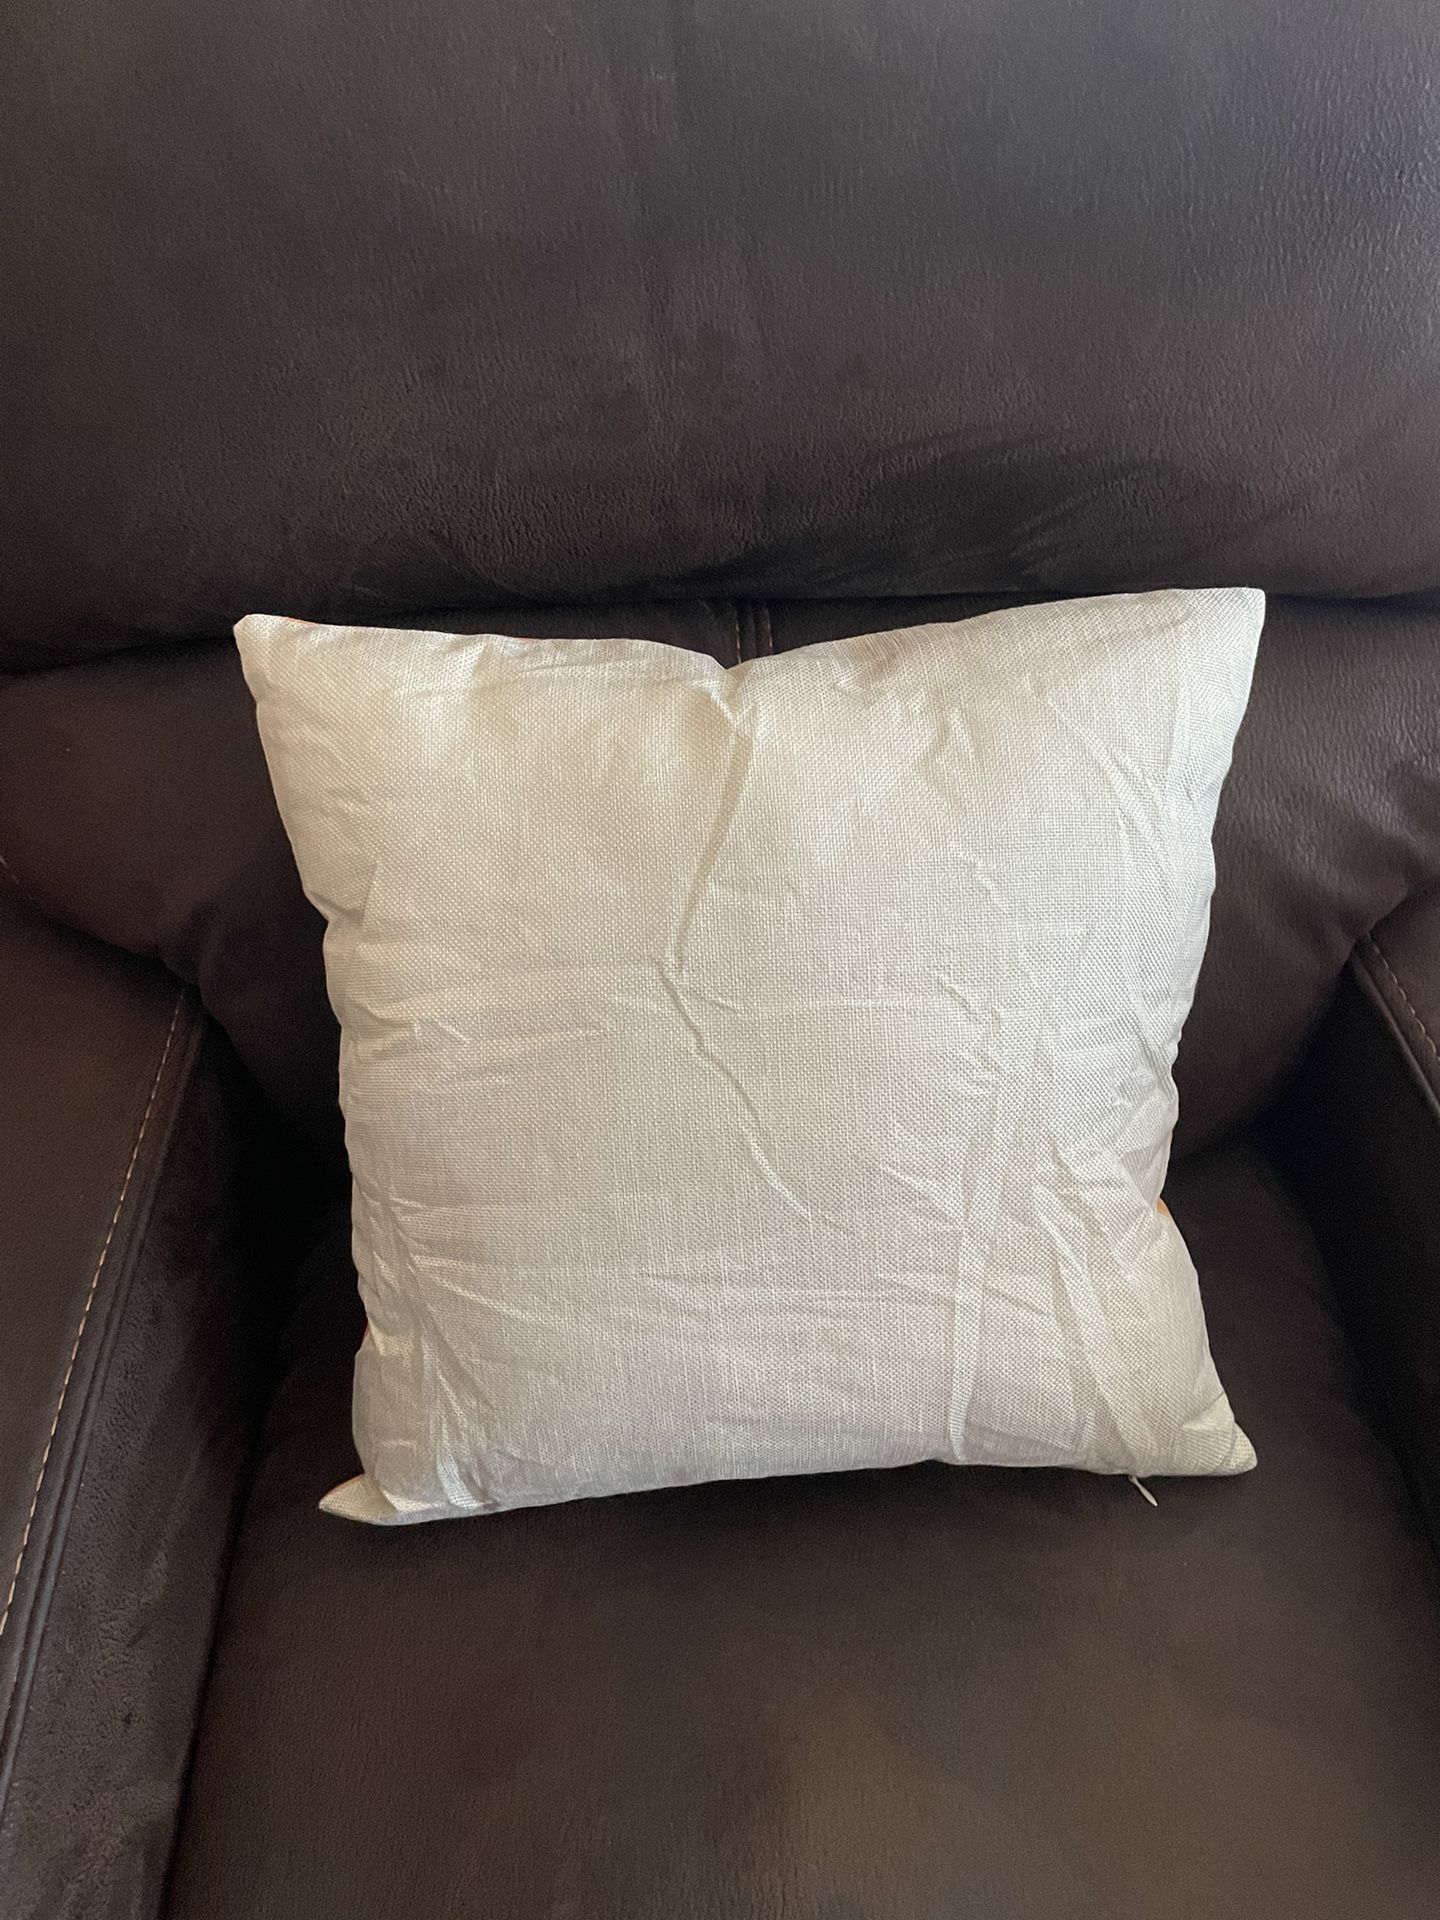 New Throw Pillow